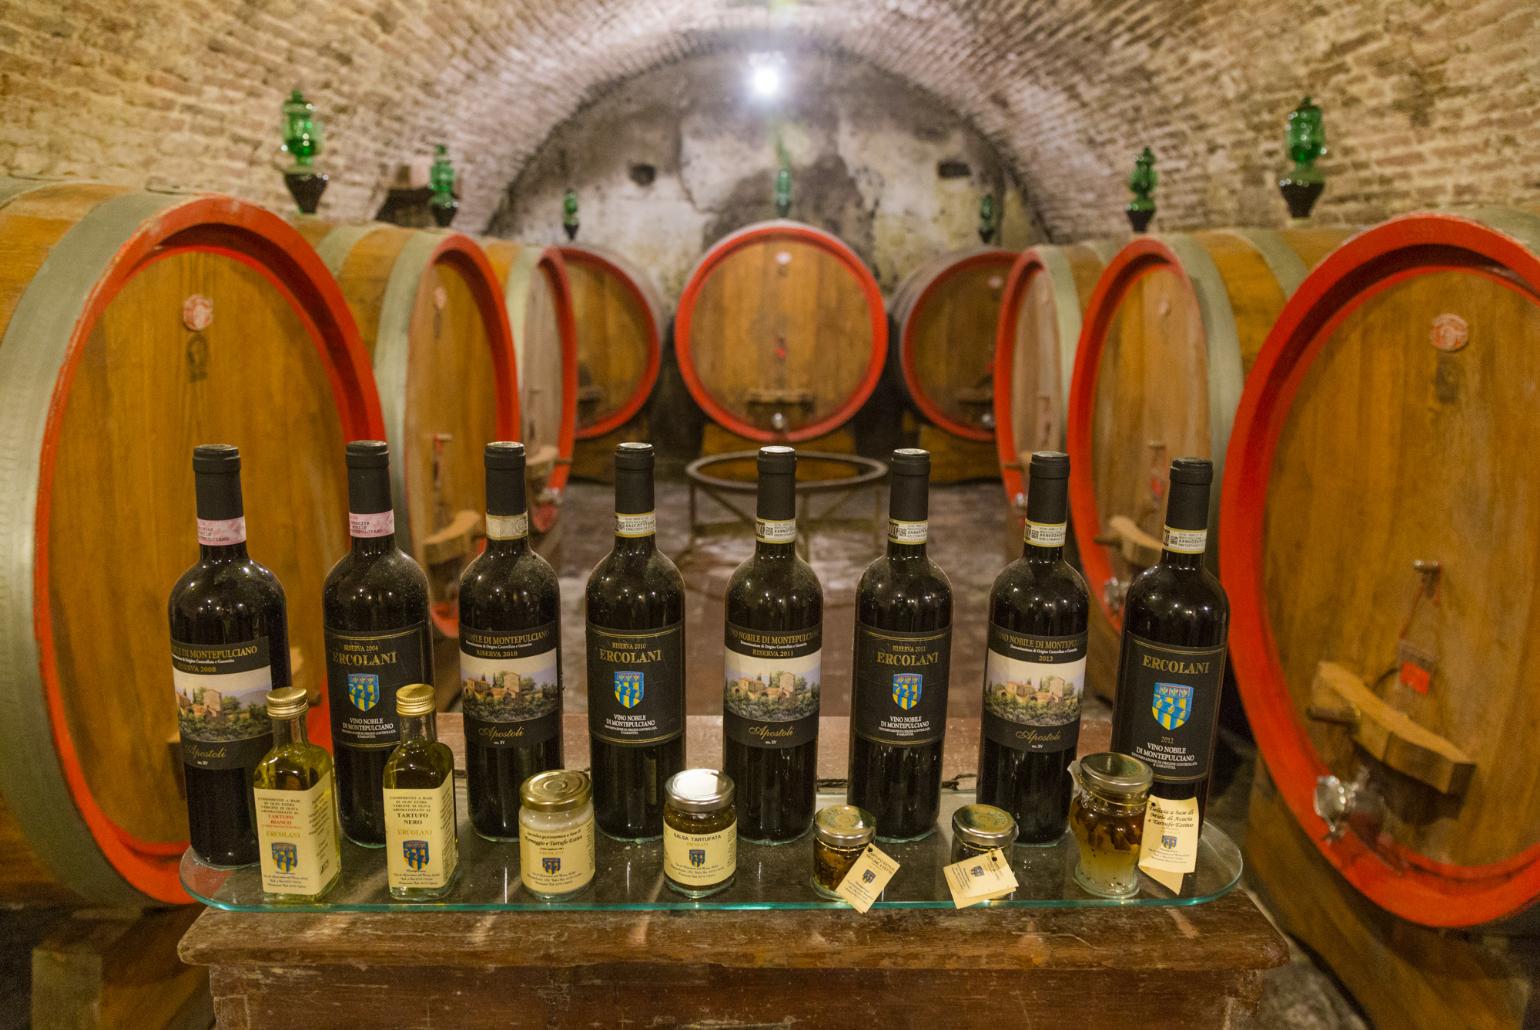 Wine cellar in Montepulciano